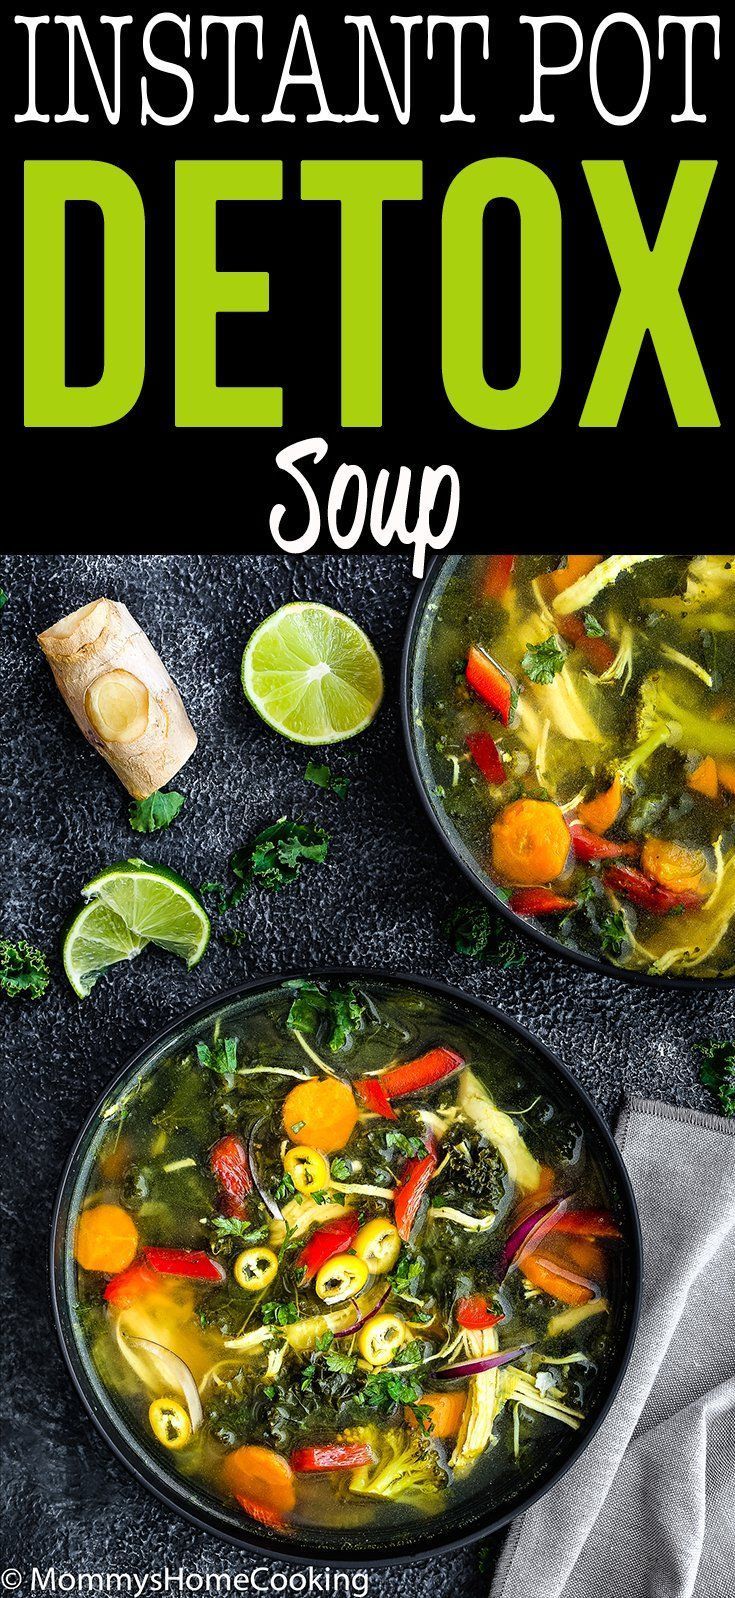 Easy Instant Pot Detox Soup -   12 healthy recipes Soup fitness ideas